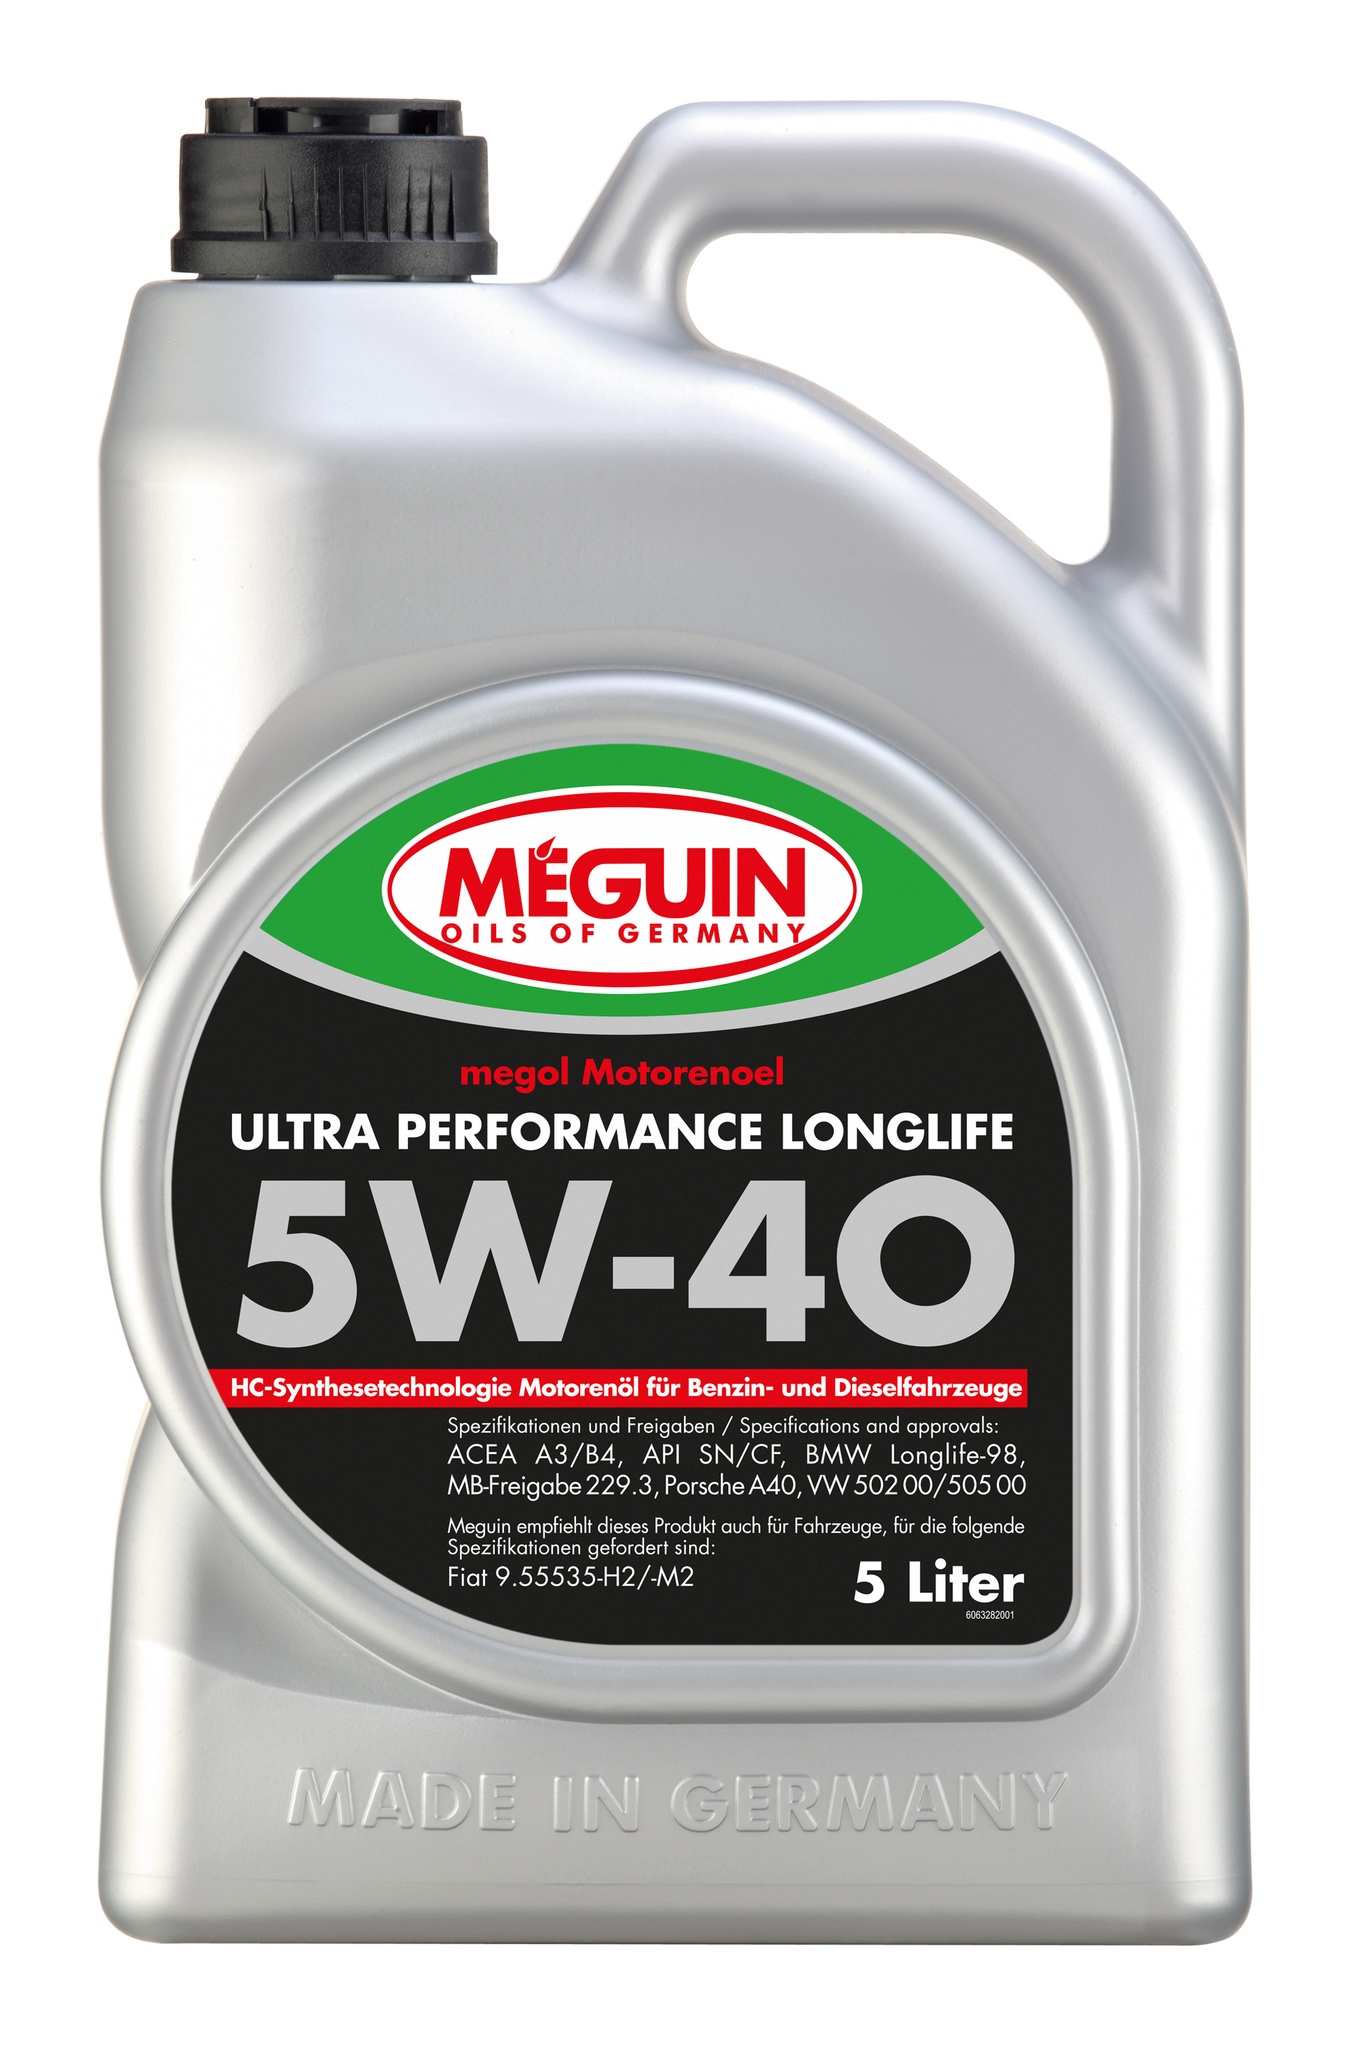 Моторное масло MEGUIN Megol Motorenoel Ultra Performance Longlife 5W40 hc-синтетическое, 5л